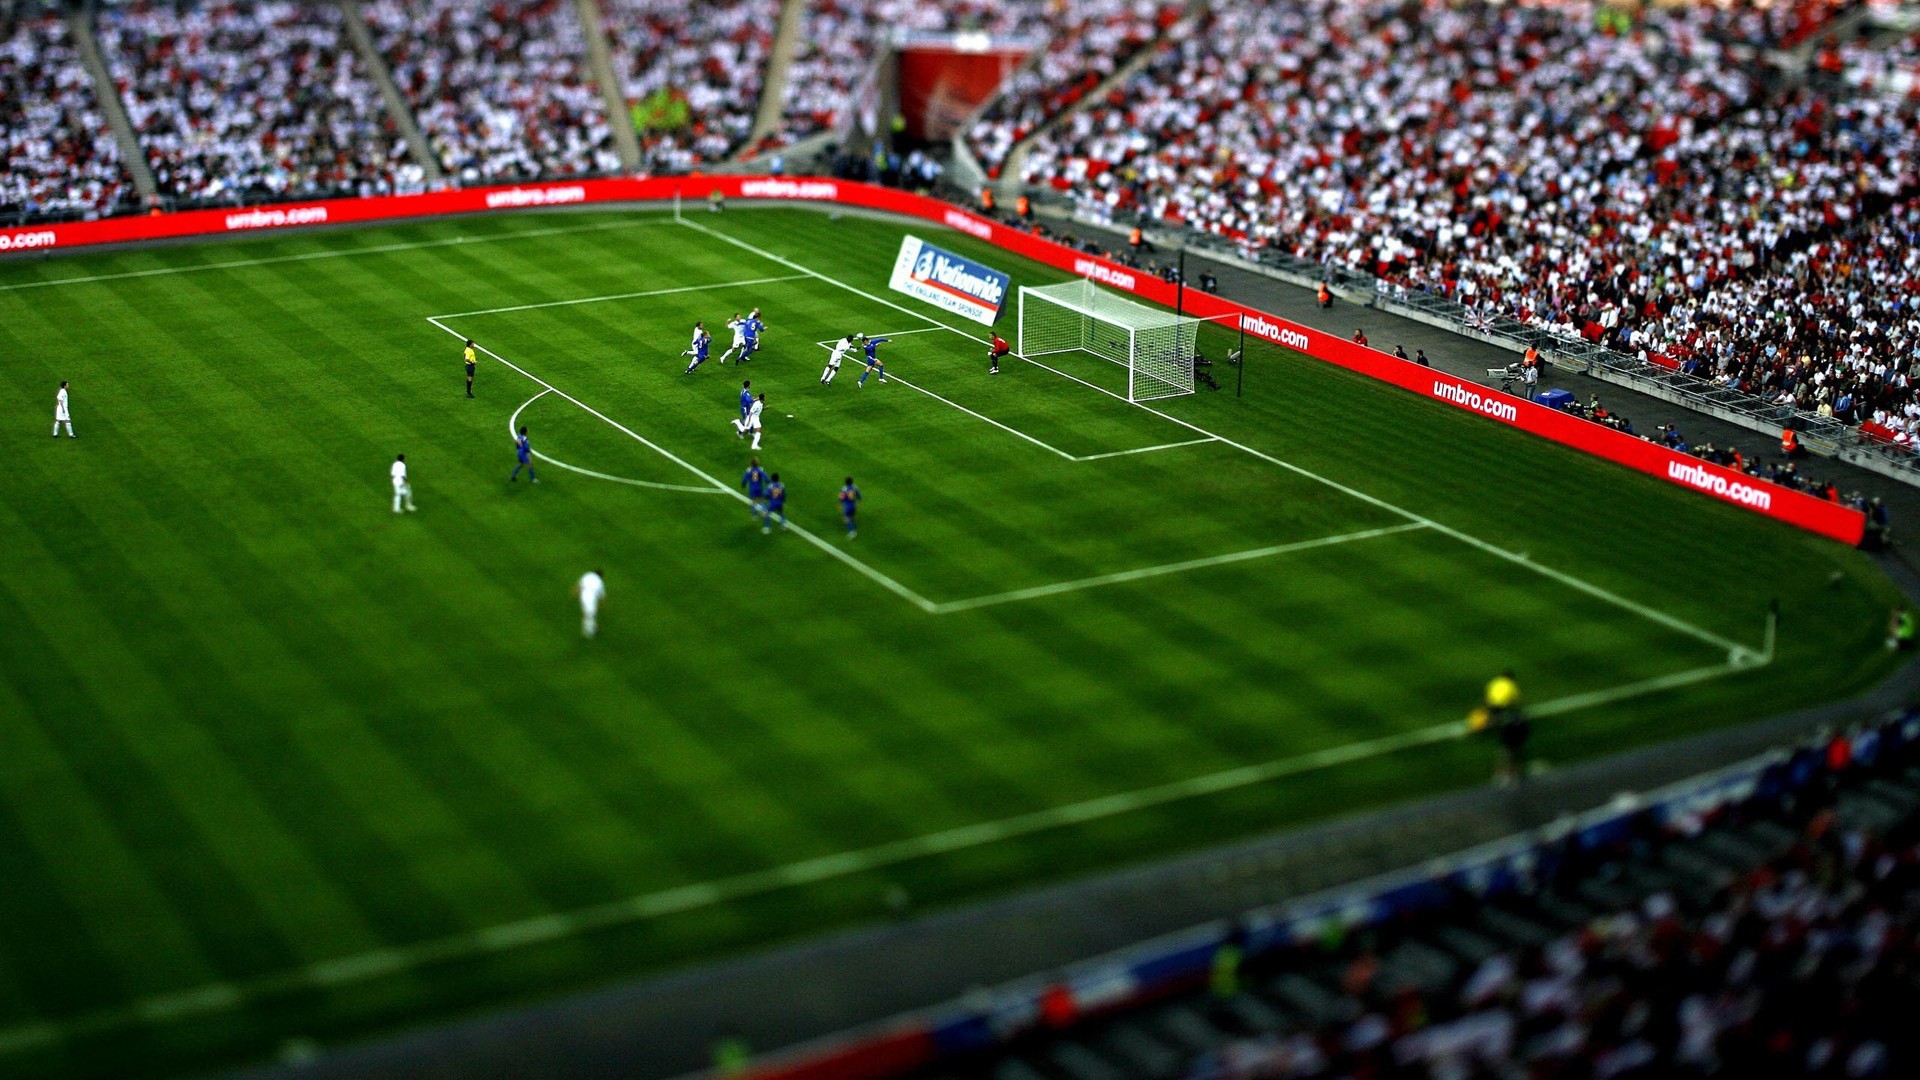 General 1920x1080 soccer soccer pitches blurred crowds tilt shift footballers sport stadium people